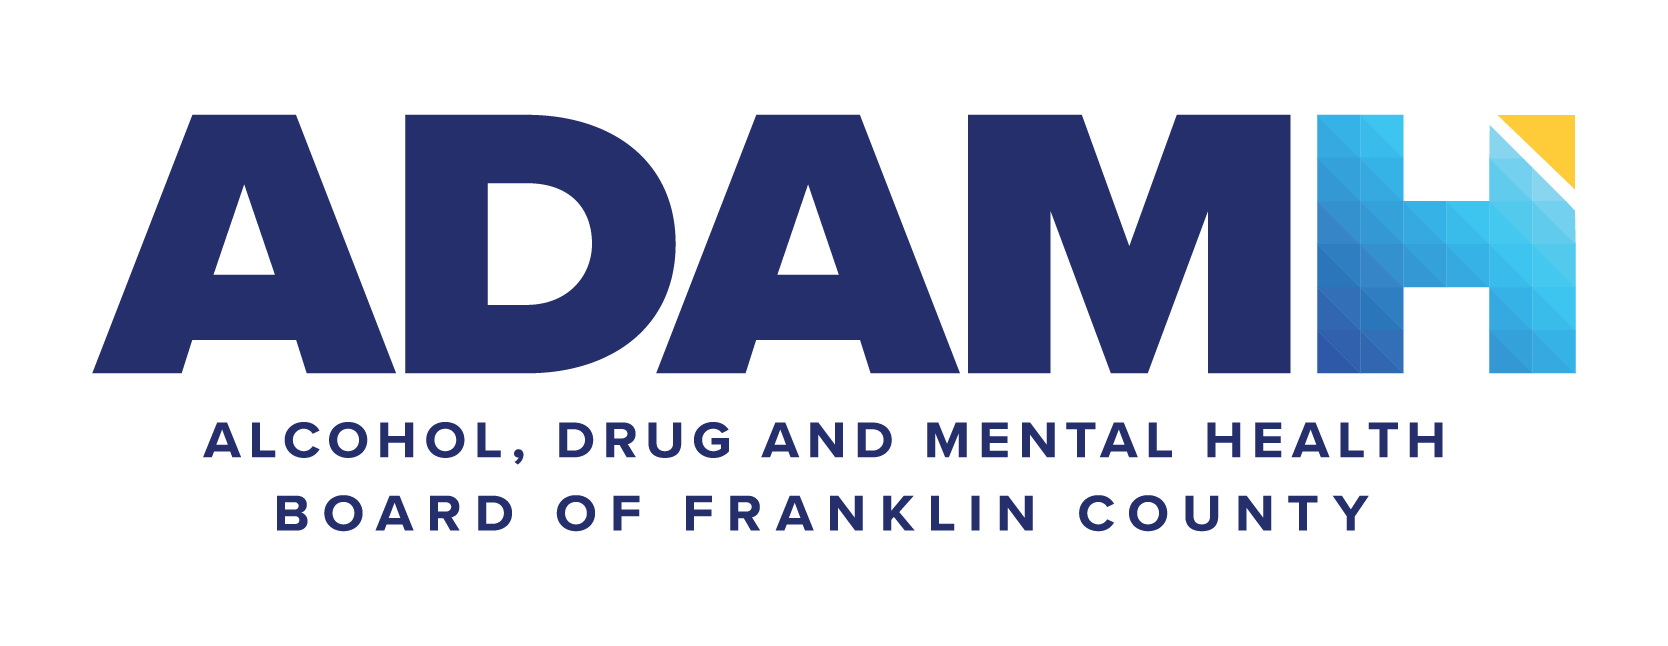 ADAMH Logo